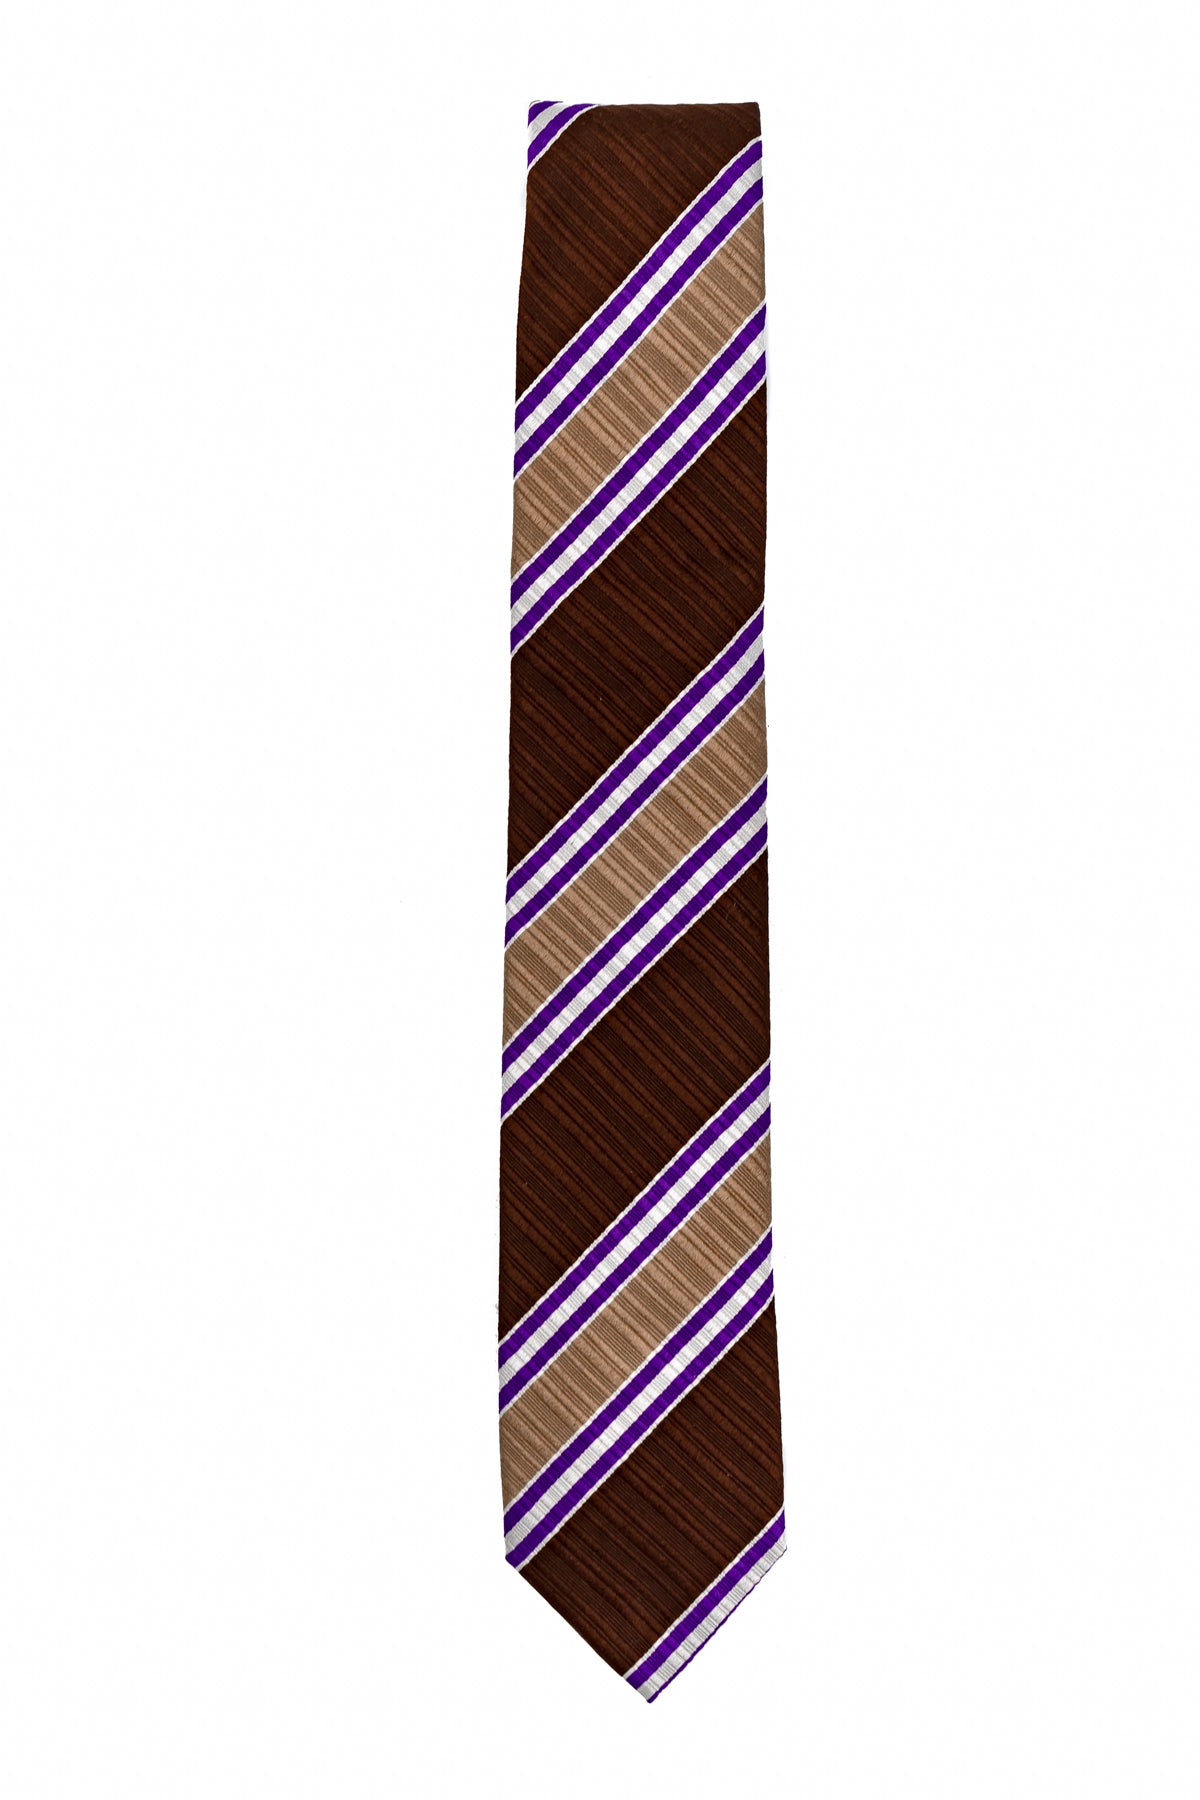 Franco Bassi Brown/purple Shantung Tie Man-1